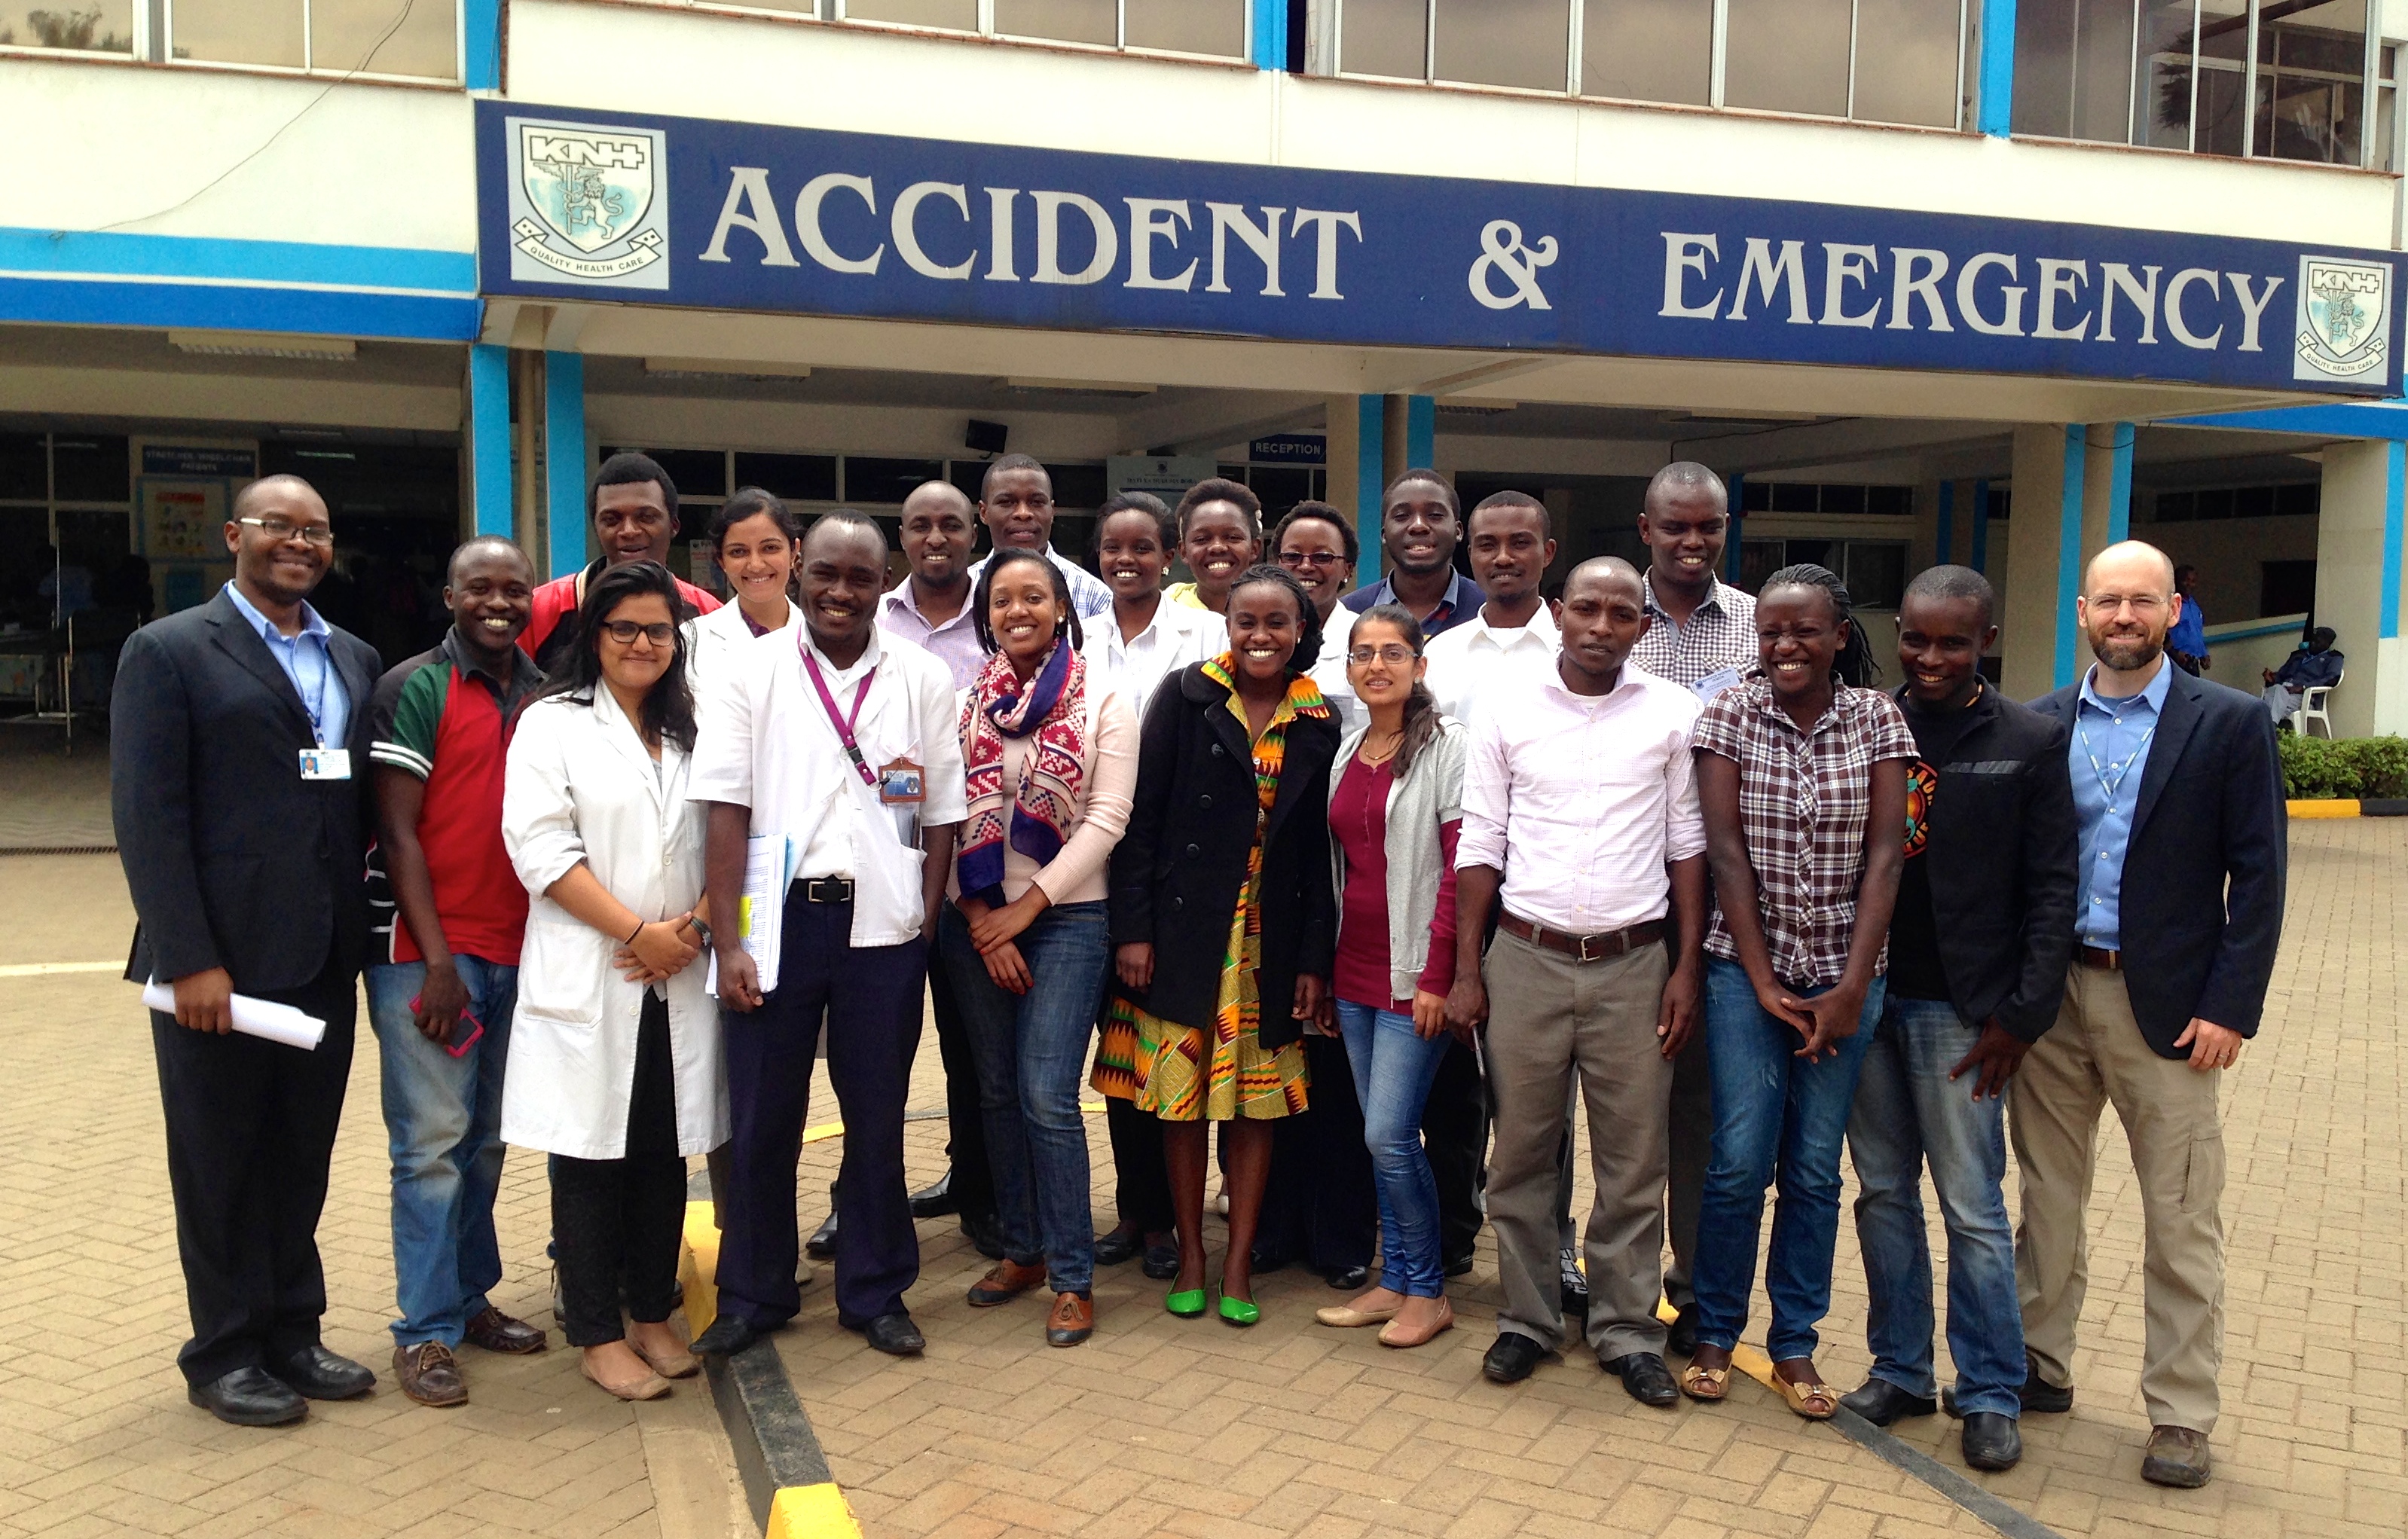 Kenyatta National Hospital, Nairobi, Kenya ER